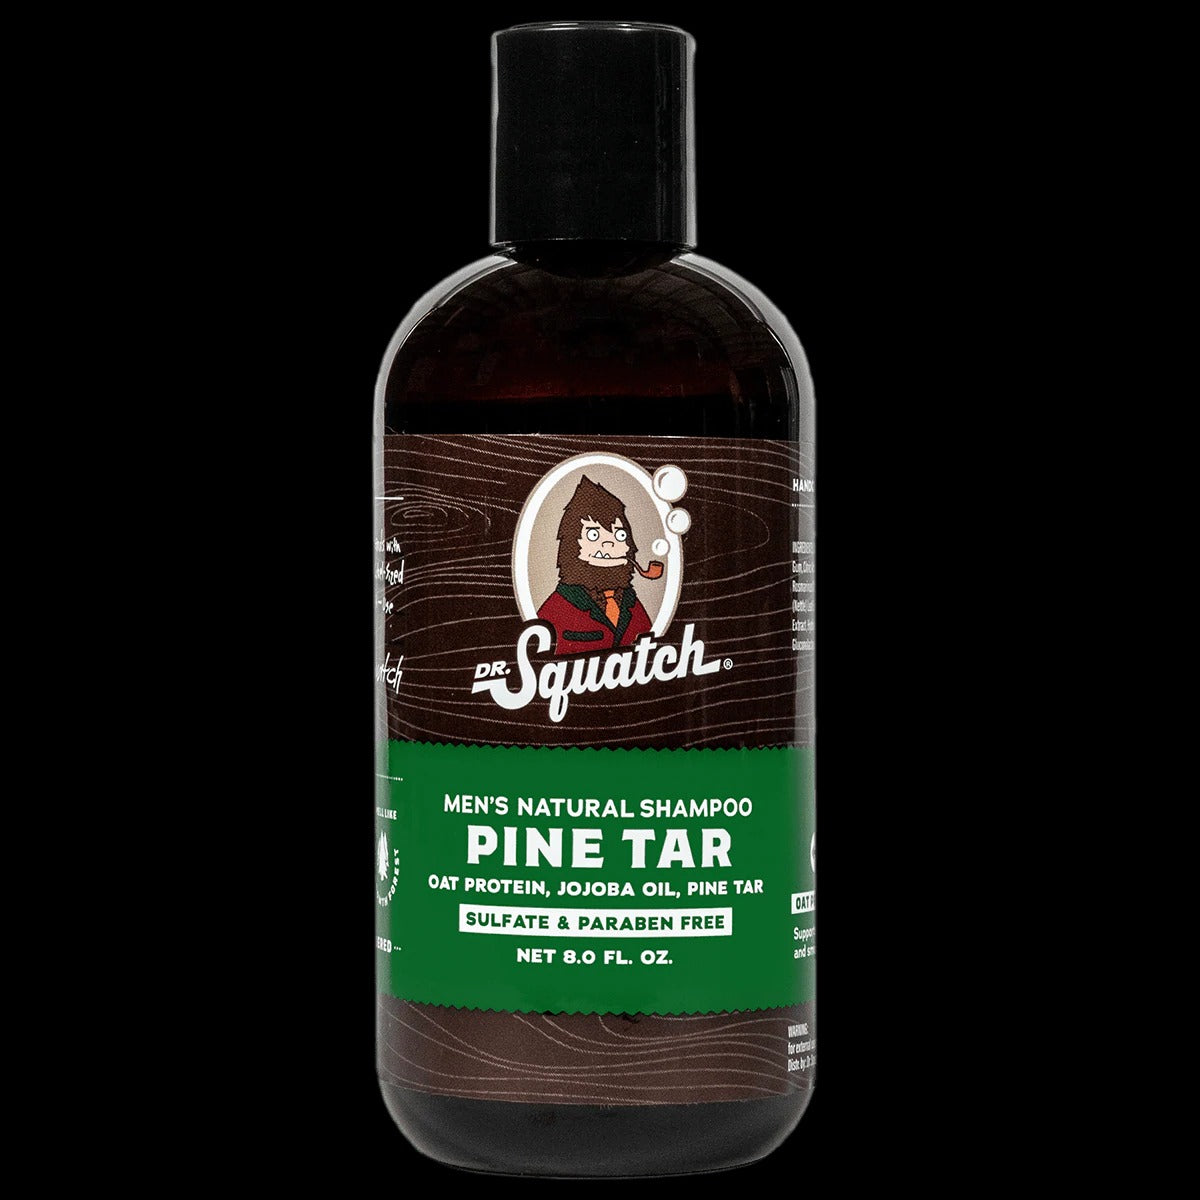 Dr.Squatch Pine Tar Shampoo and Conditioner